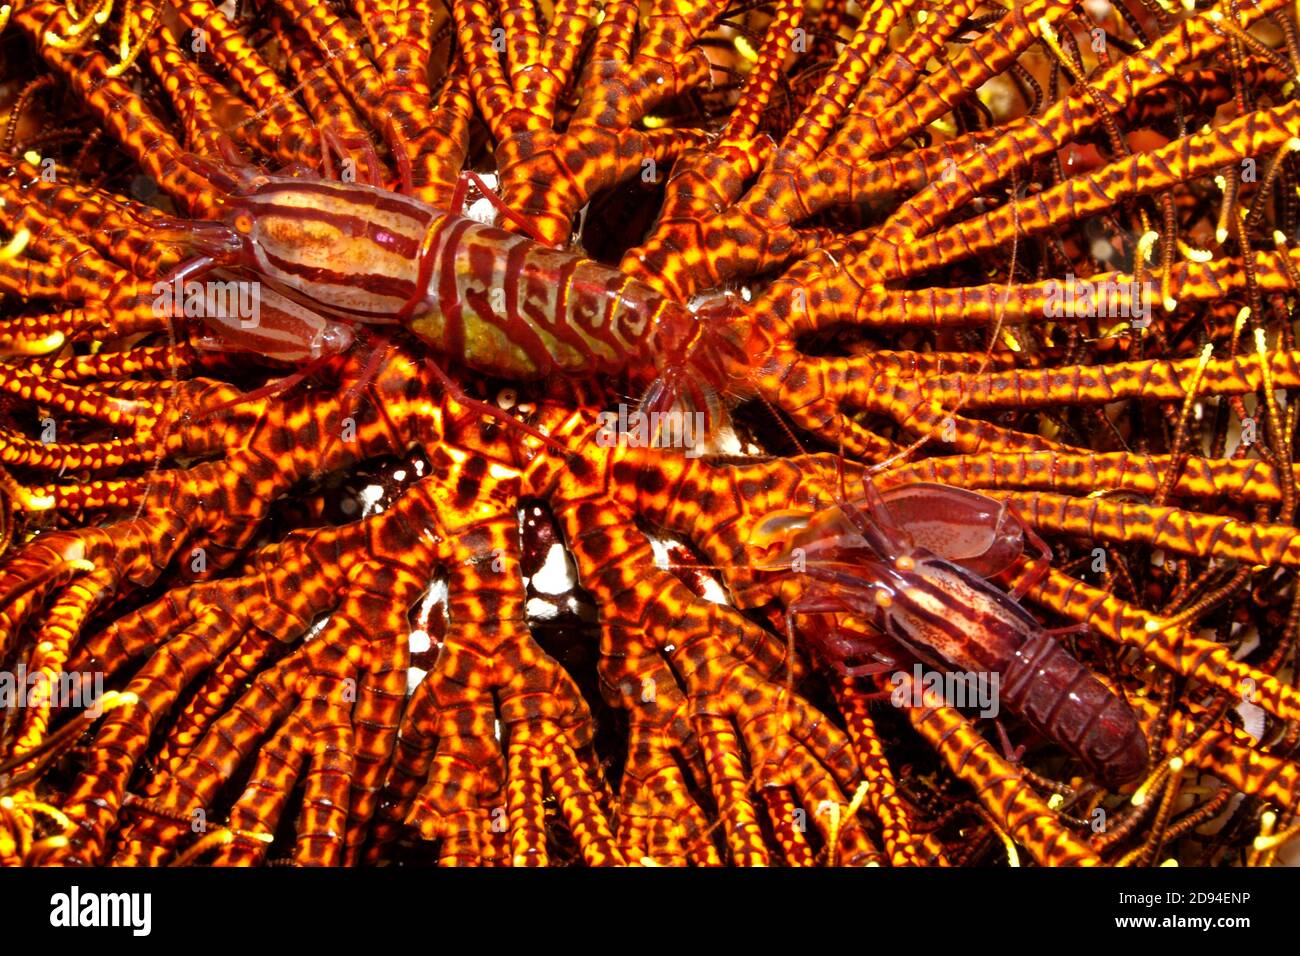 Stimpson’s Snapping Shrimps, Synalpheus stimpsoni, living underneath a crinoid, or featherstar. Previously Synalpheus striatus. Uepi, Solomon Islands. Stock Photo